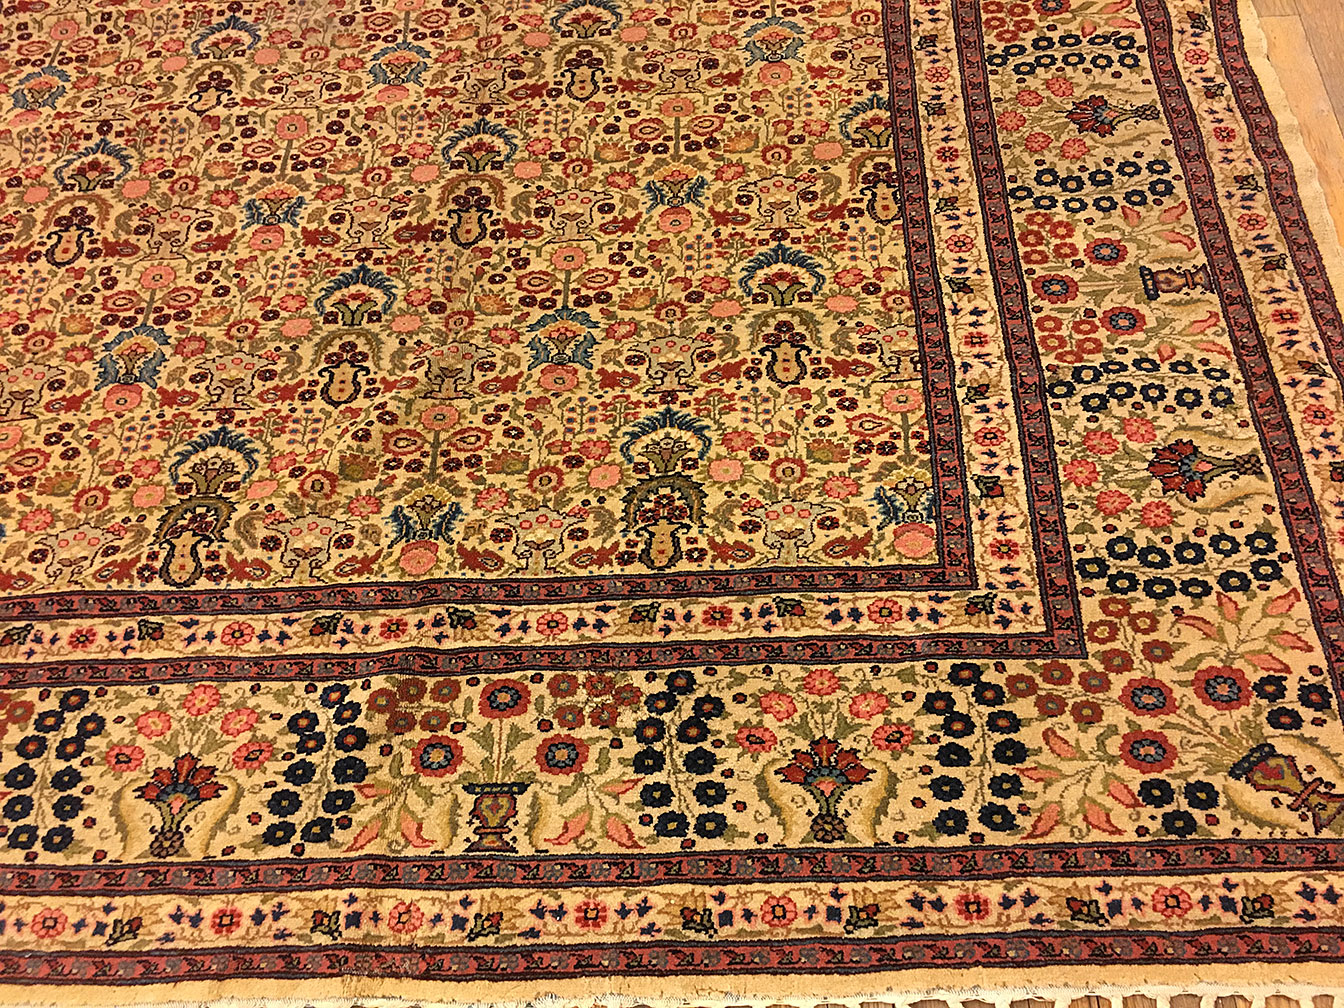 Antique tabriz Carpet - # 52611